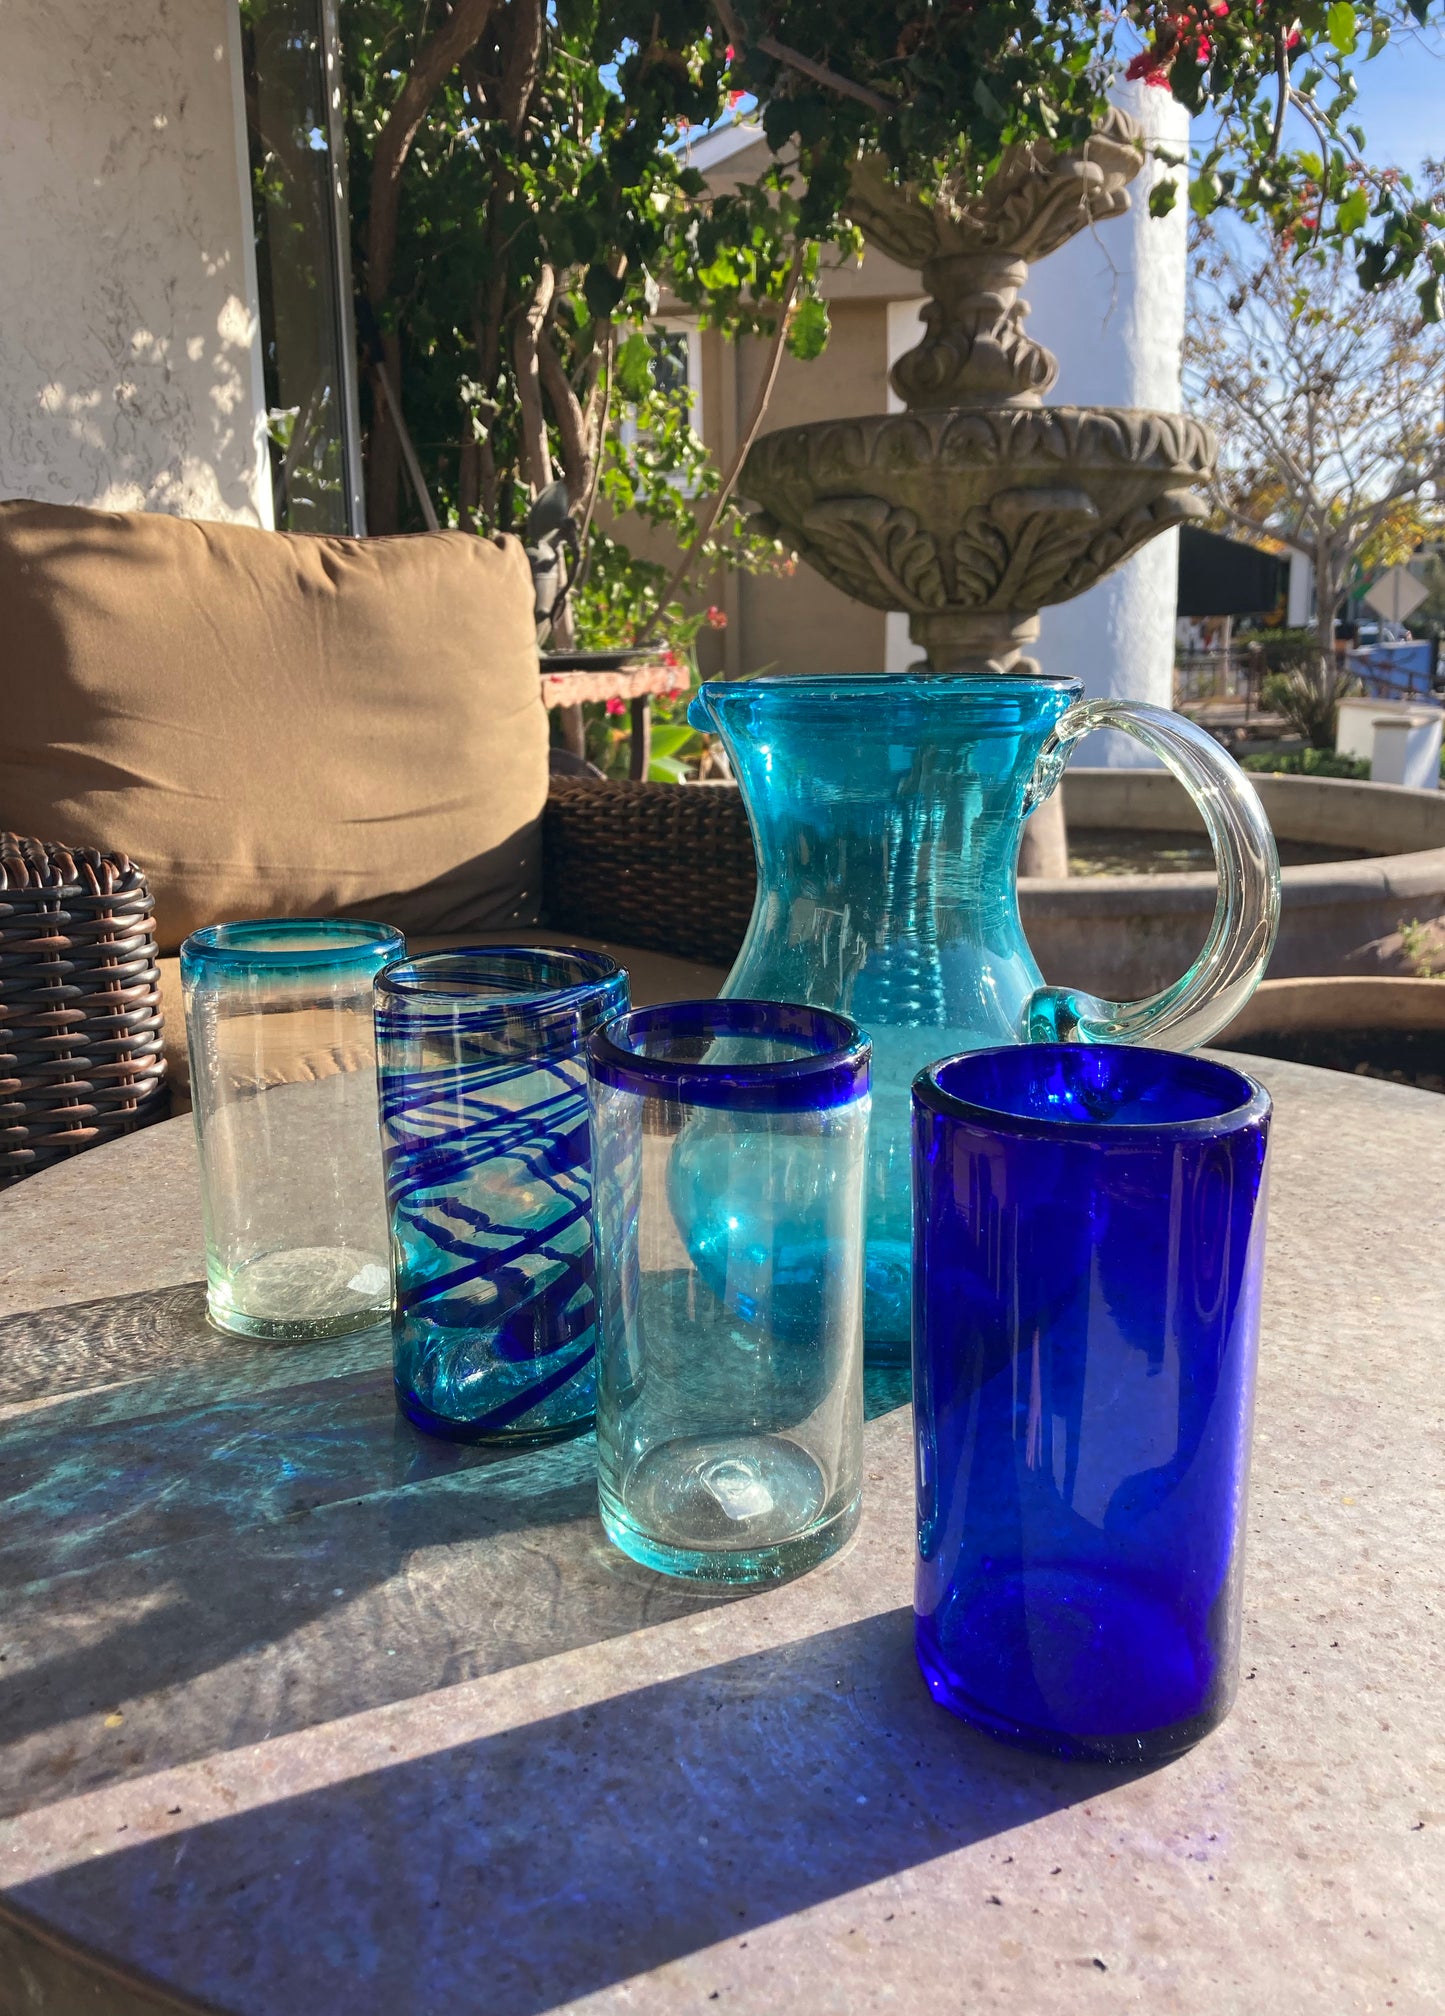 Hand Blown Water Glass - Turquoise Rim